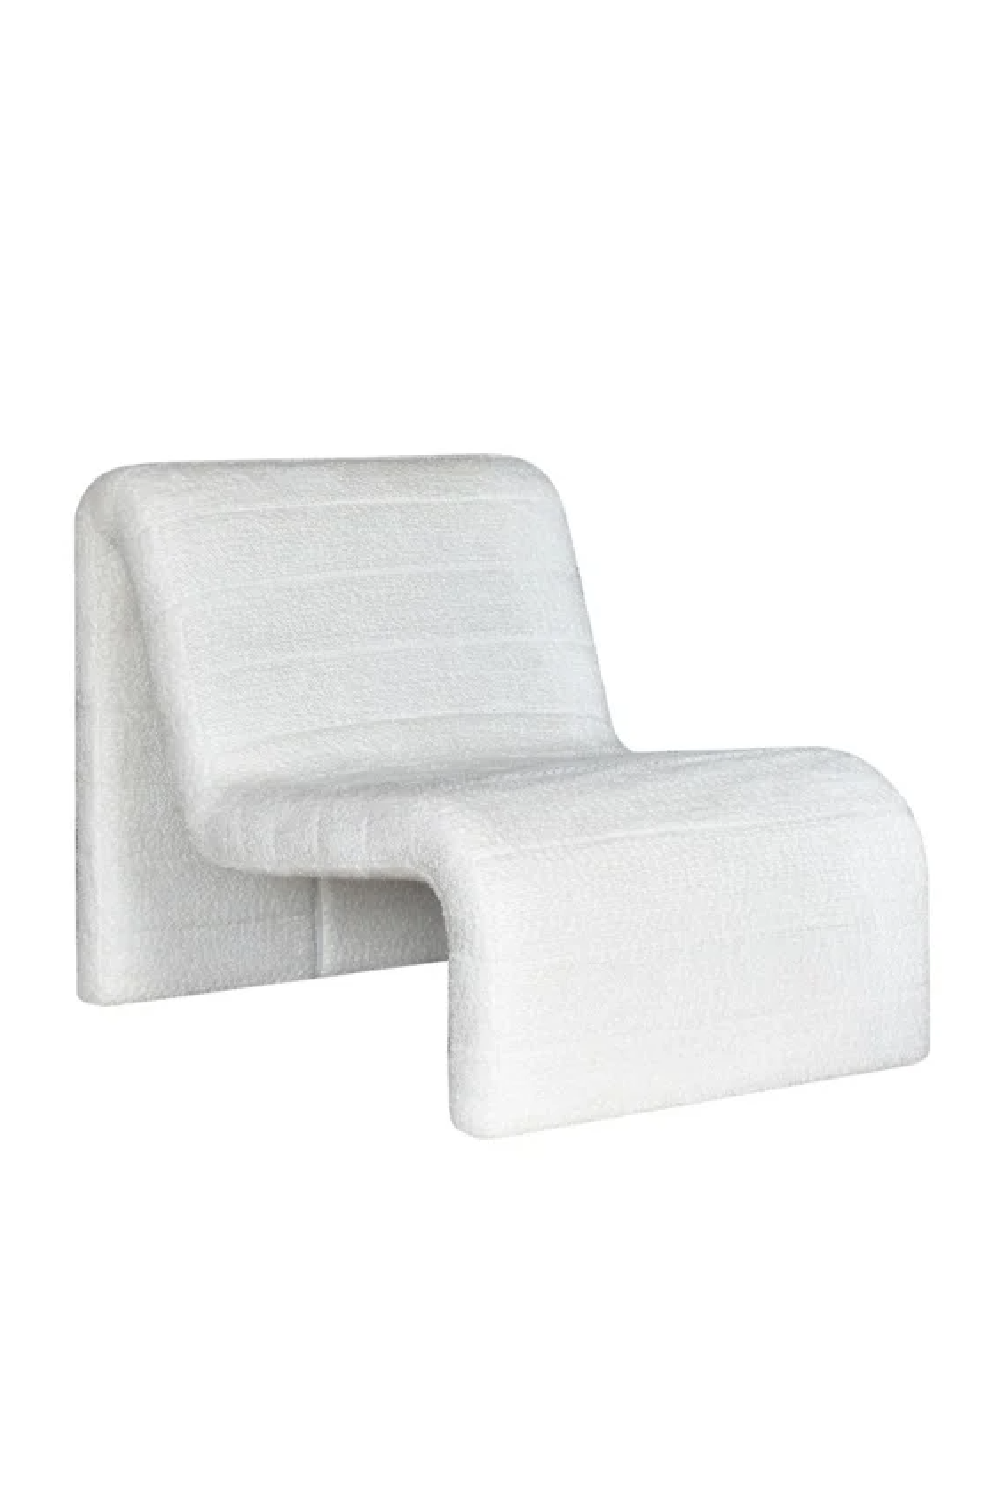 Modern Curved Easy Chair | OROA Kelly | Oroa.com